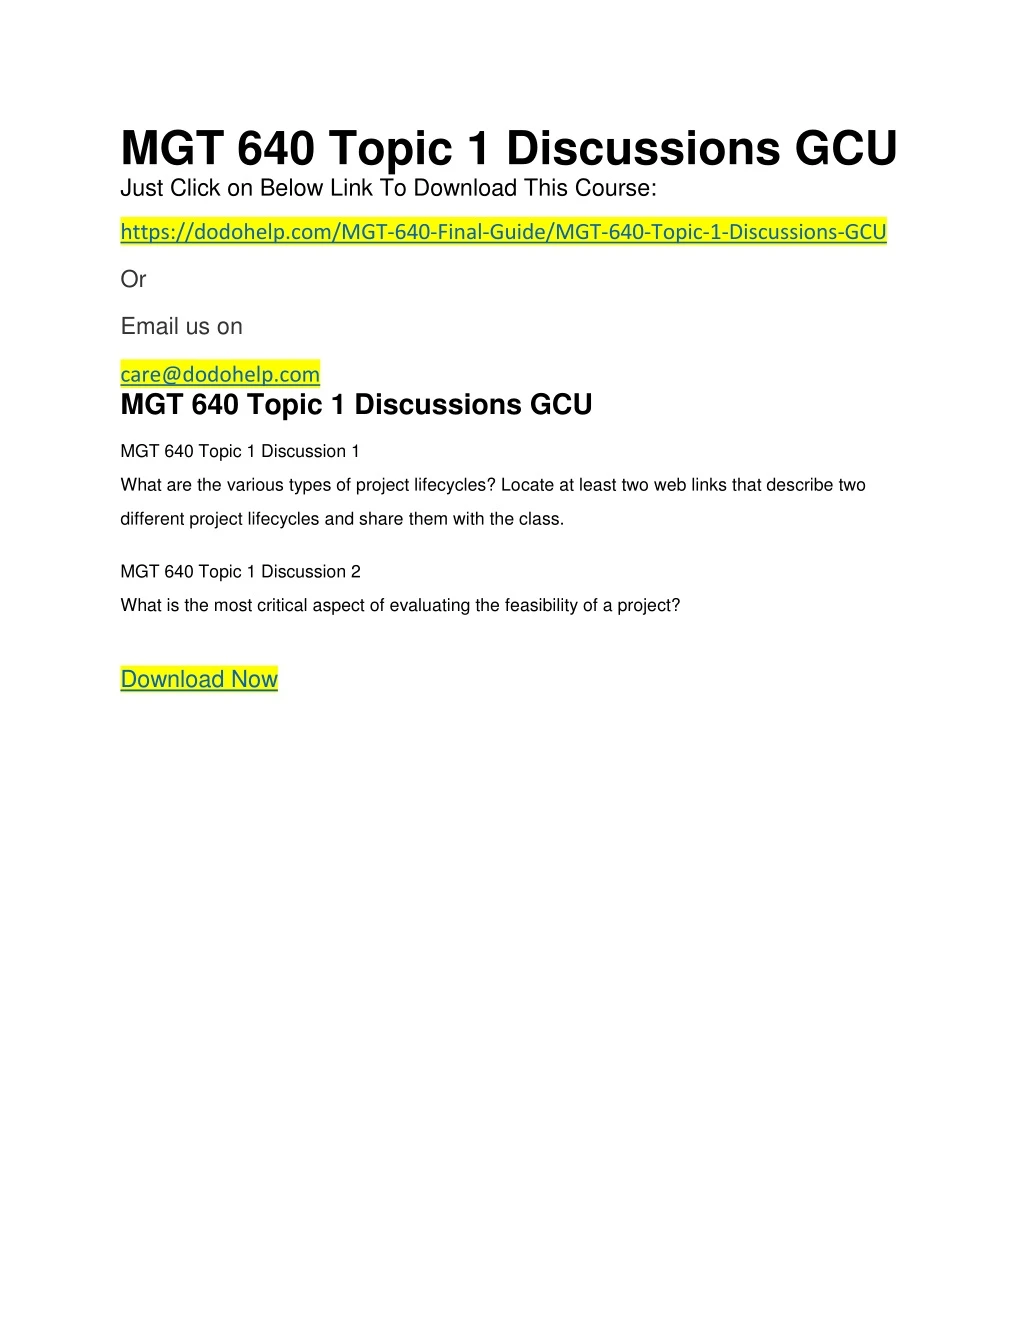 mgt 640 topic 1 discussions gcu just click